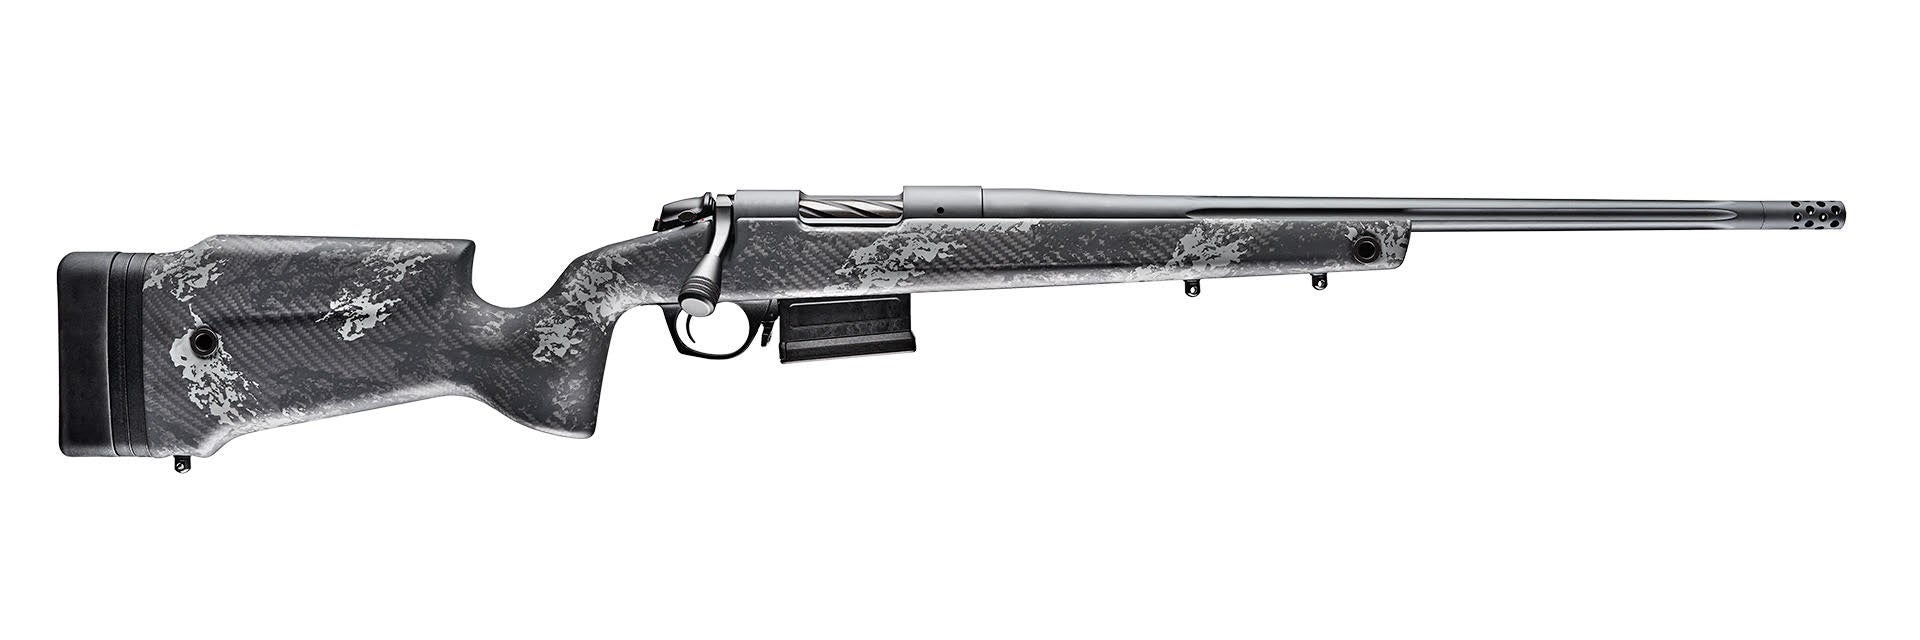 Bergara B14 Squared Crest hunting rifle